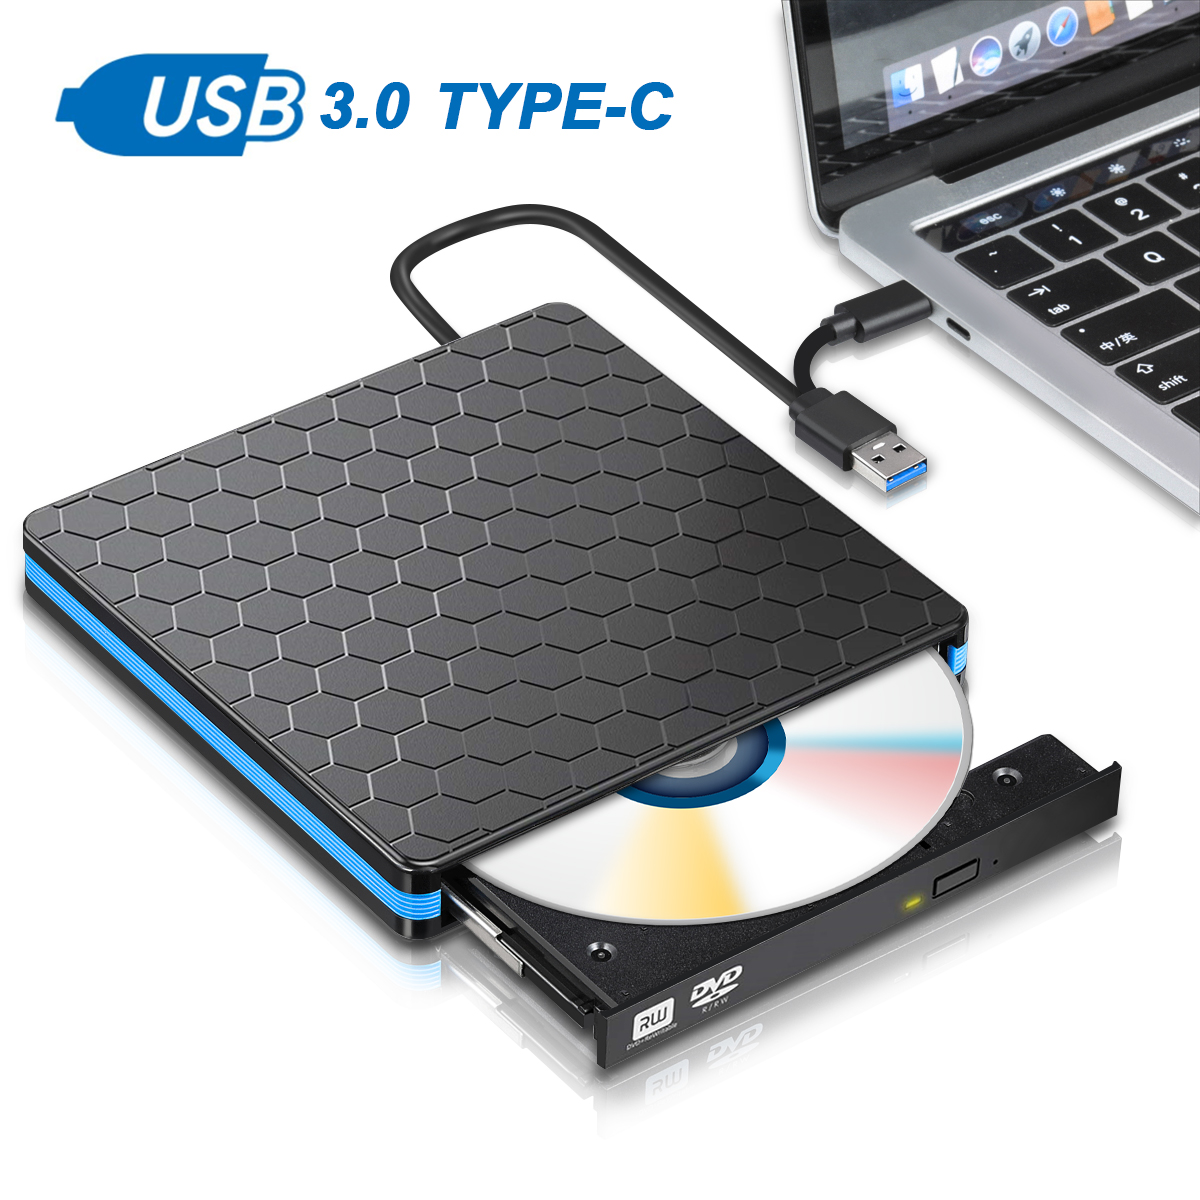 USB 2.0 External CD/DVD Drive for Compaq presario v3309tu